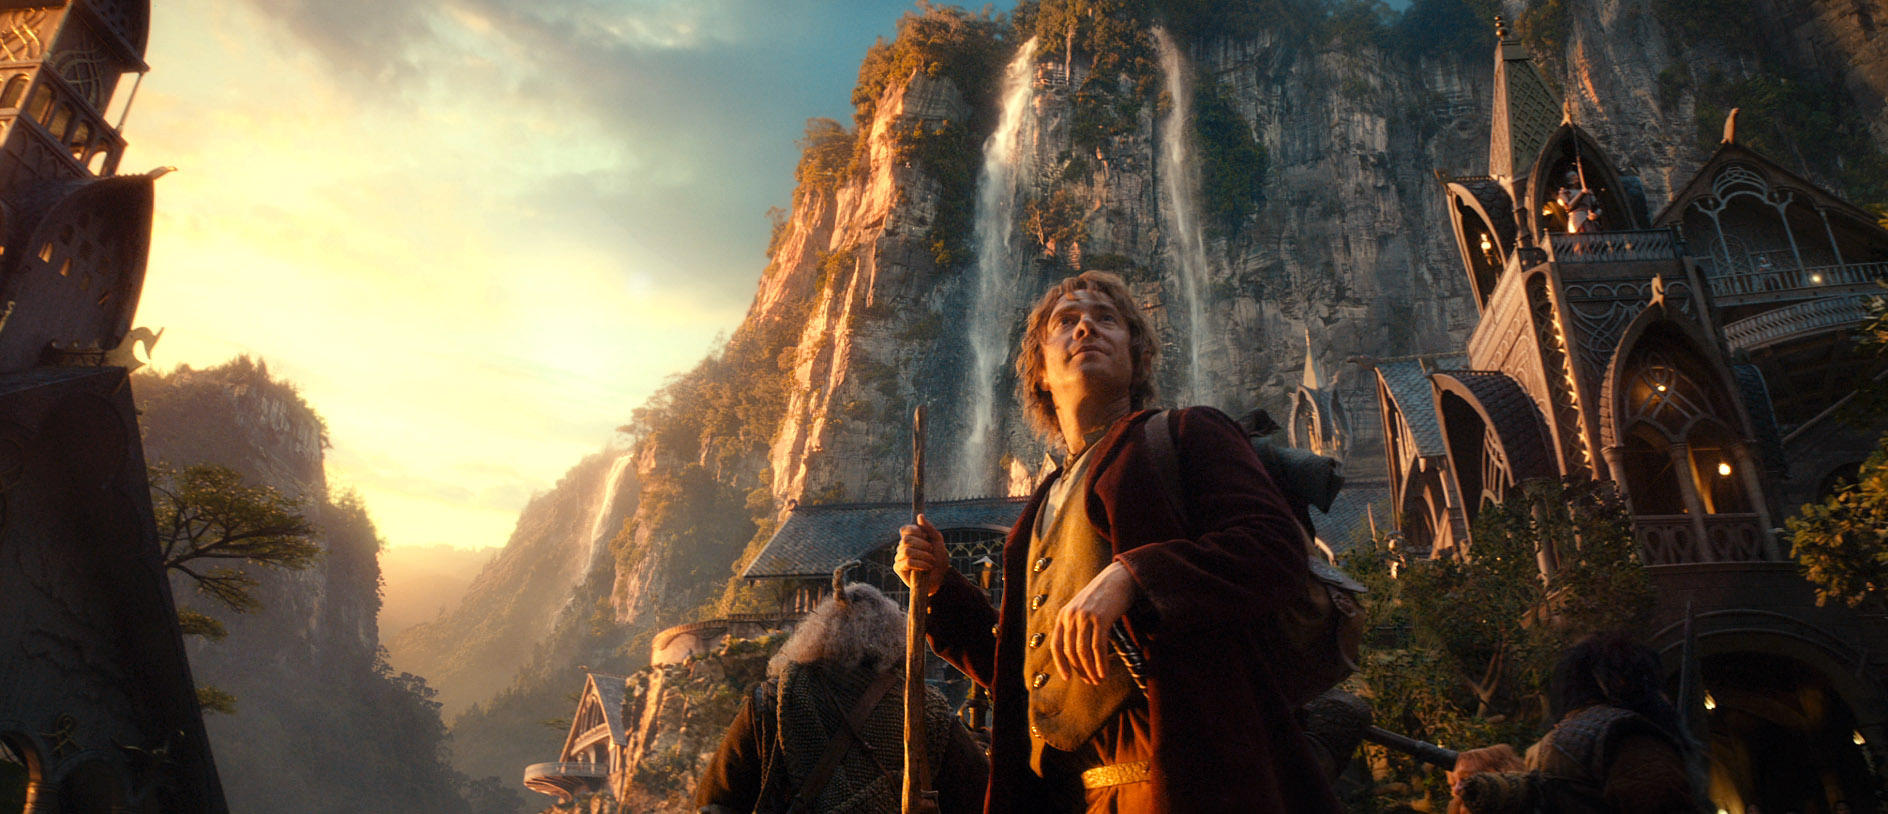 ''The Hobbit: An Unexpected Journey'' stars Martin Freeman as unlikely hero Bilbo Baggins. Photos: Warner Bros